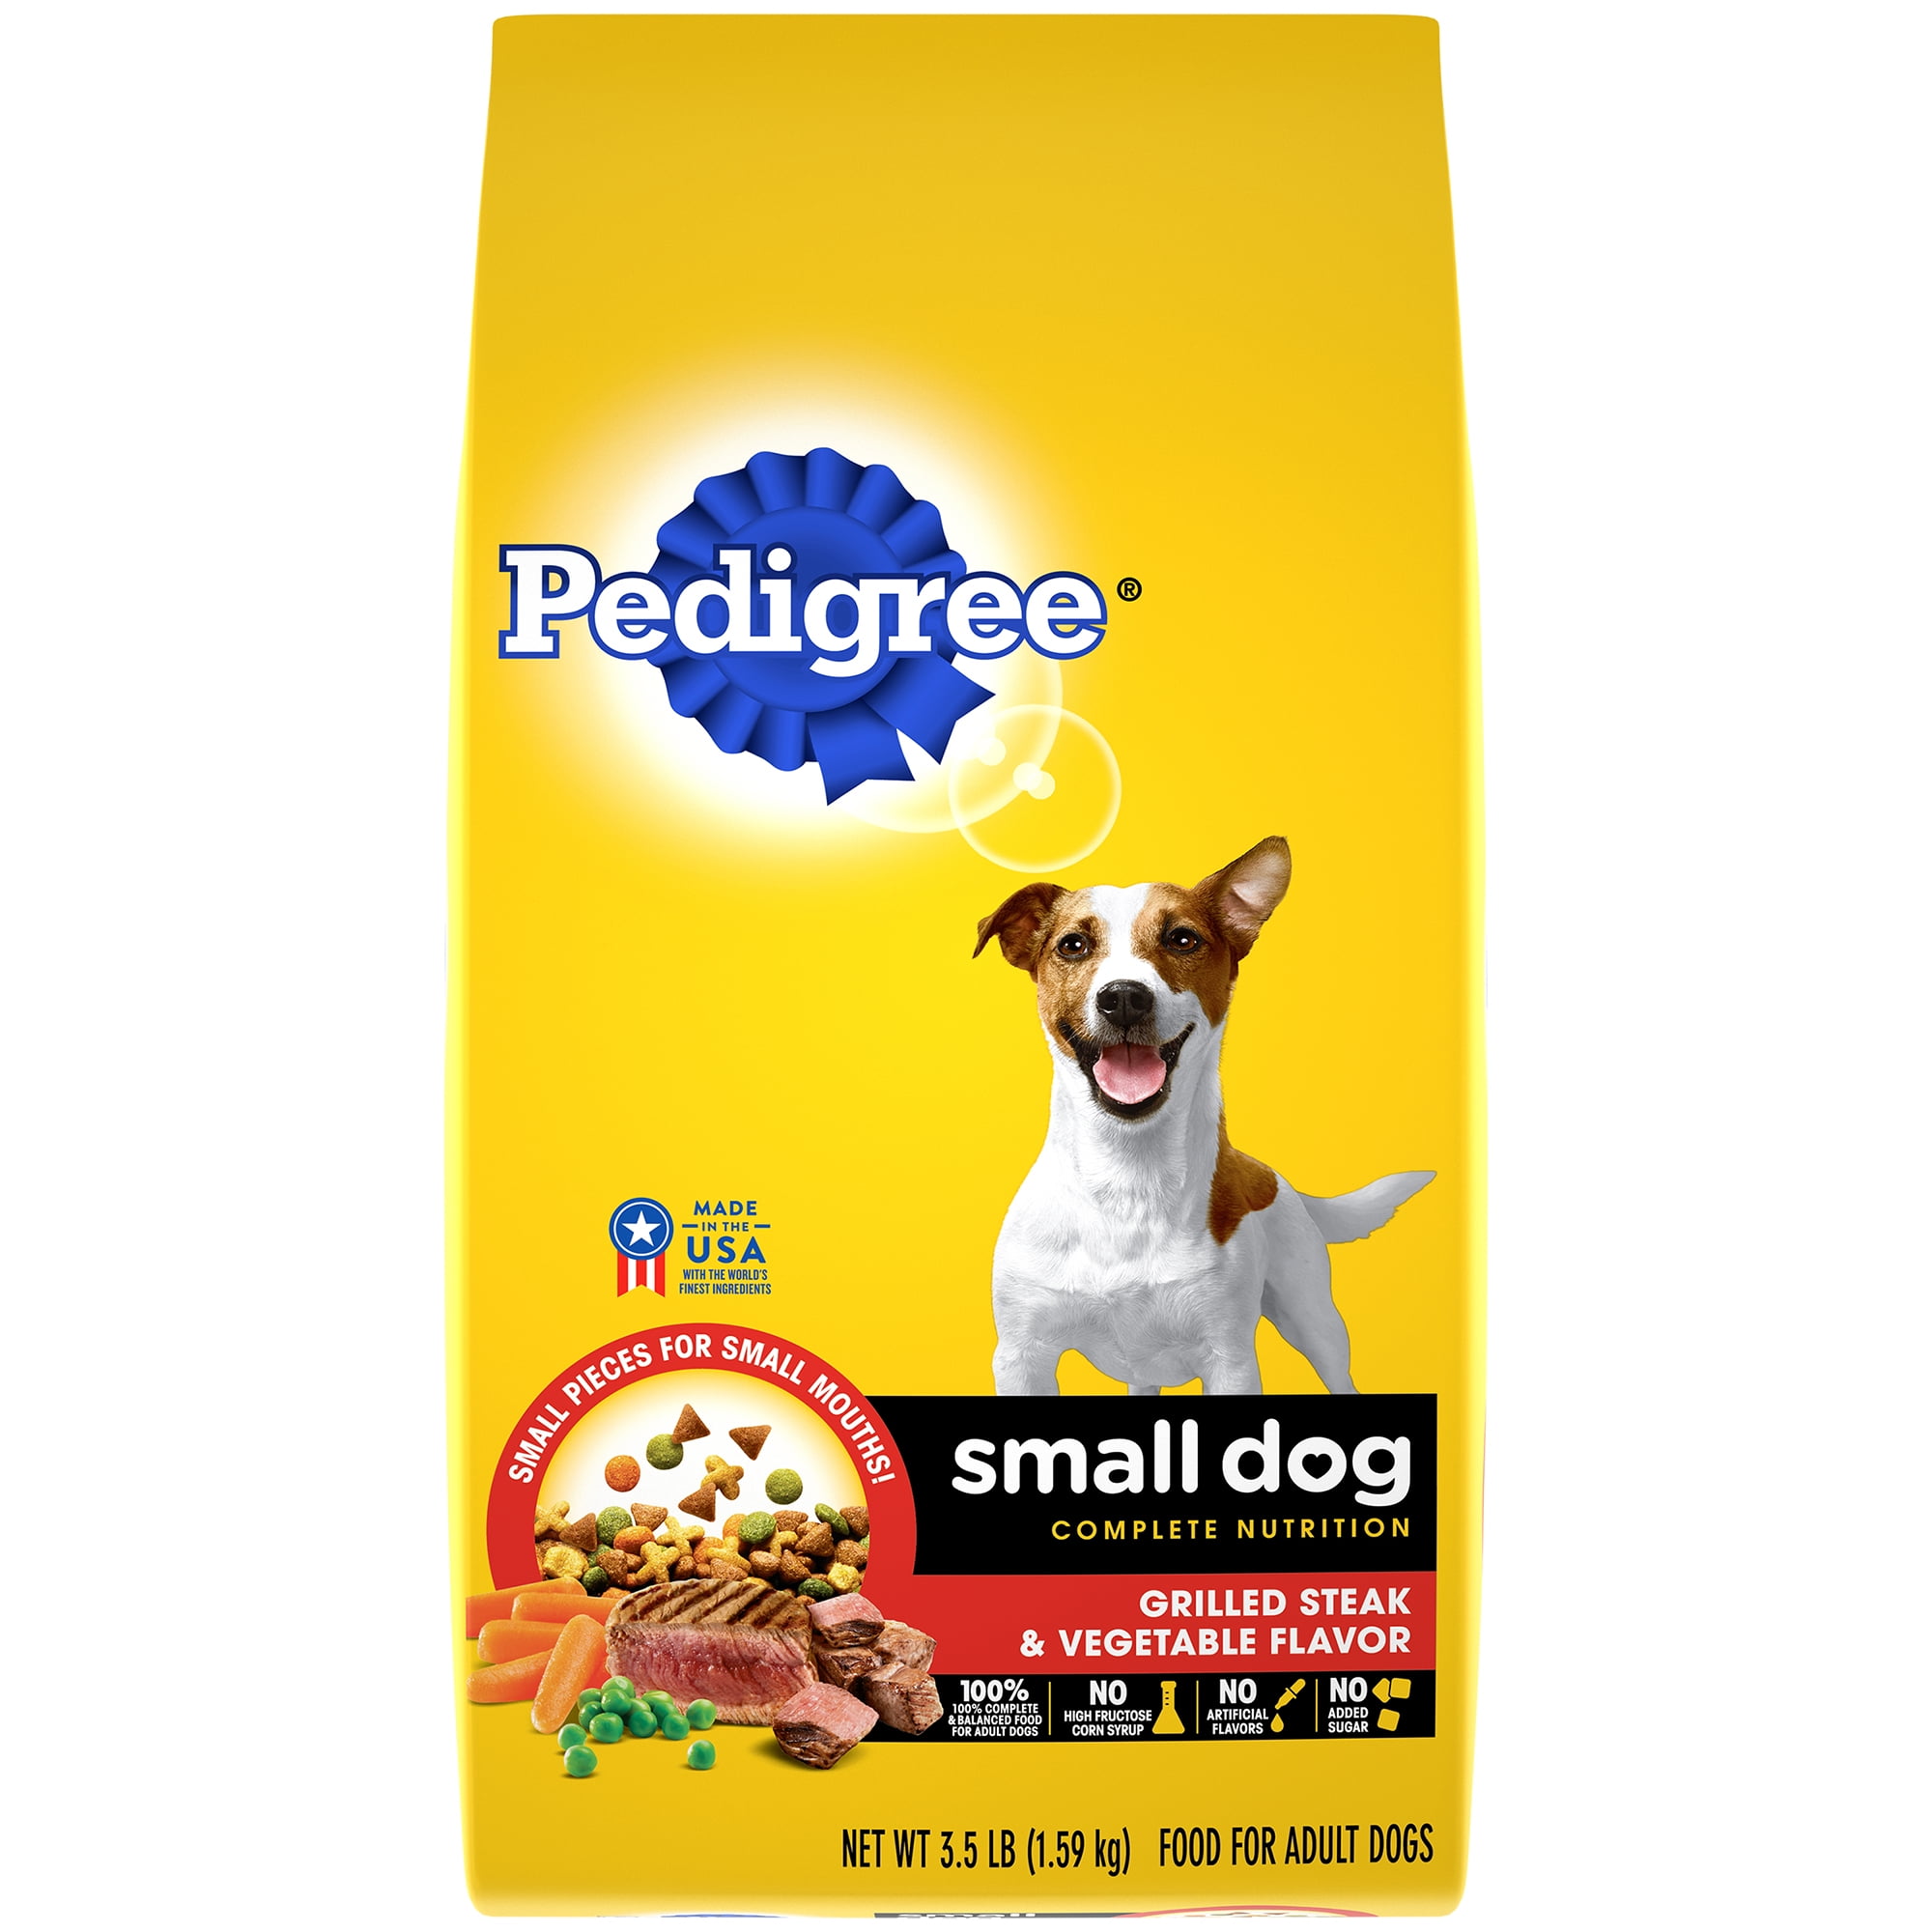 PEDIGREE Small Dog Complete Nutrition Adult Dry Dog Food Grilled Steak and Vegetable Flavor, 3.5